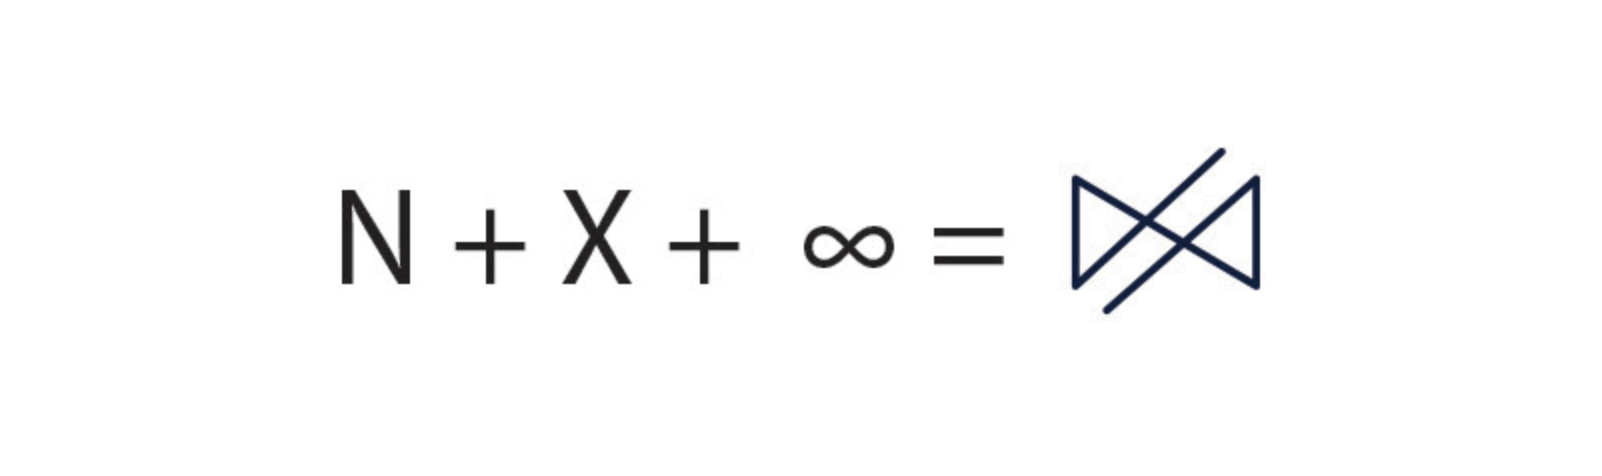 n + x = nexus logo concept